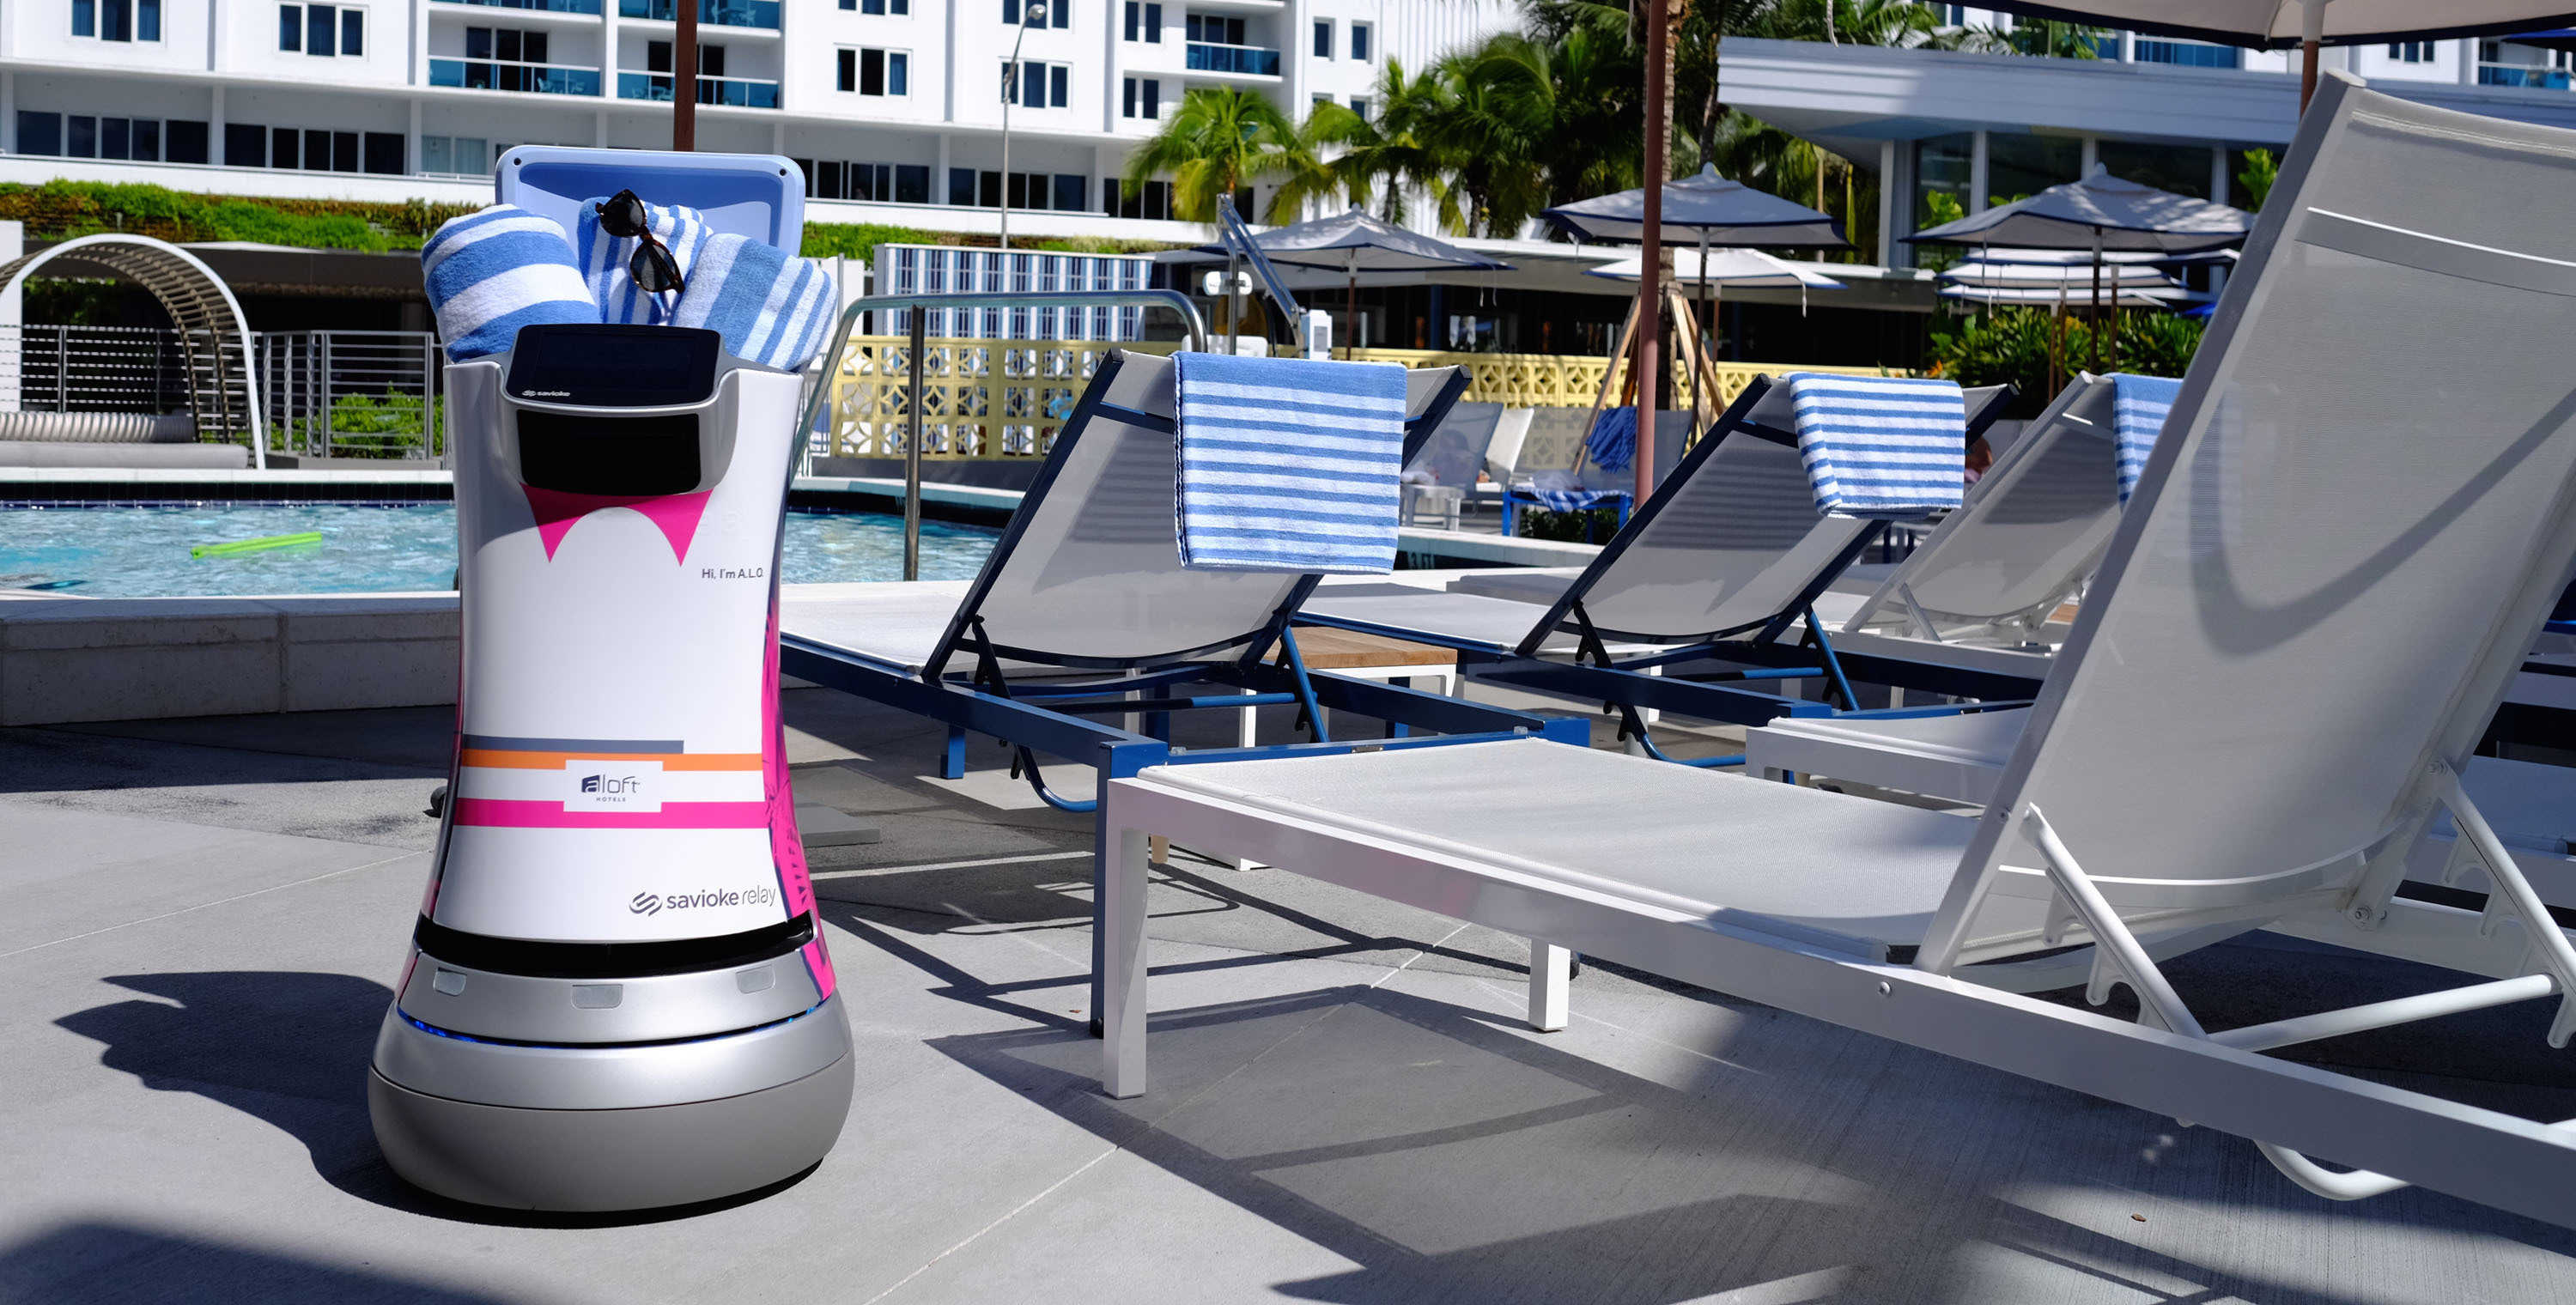 Botlr hotel robot Aloft